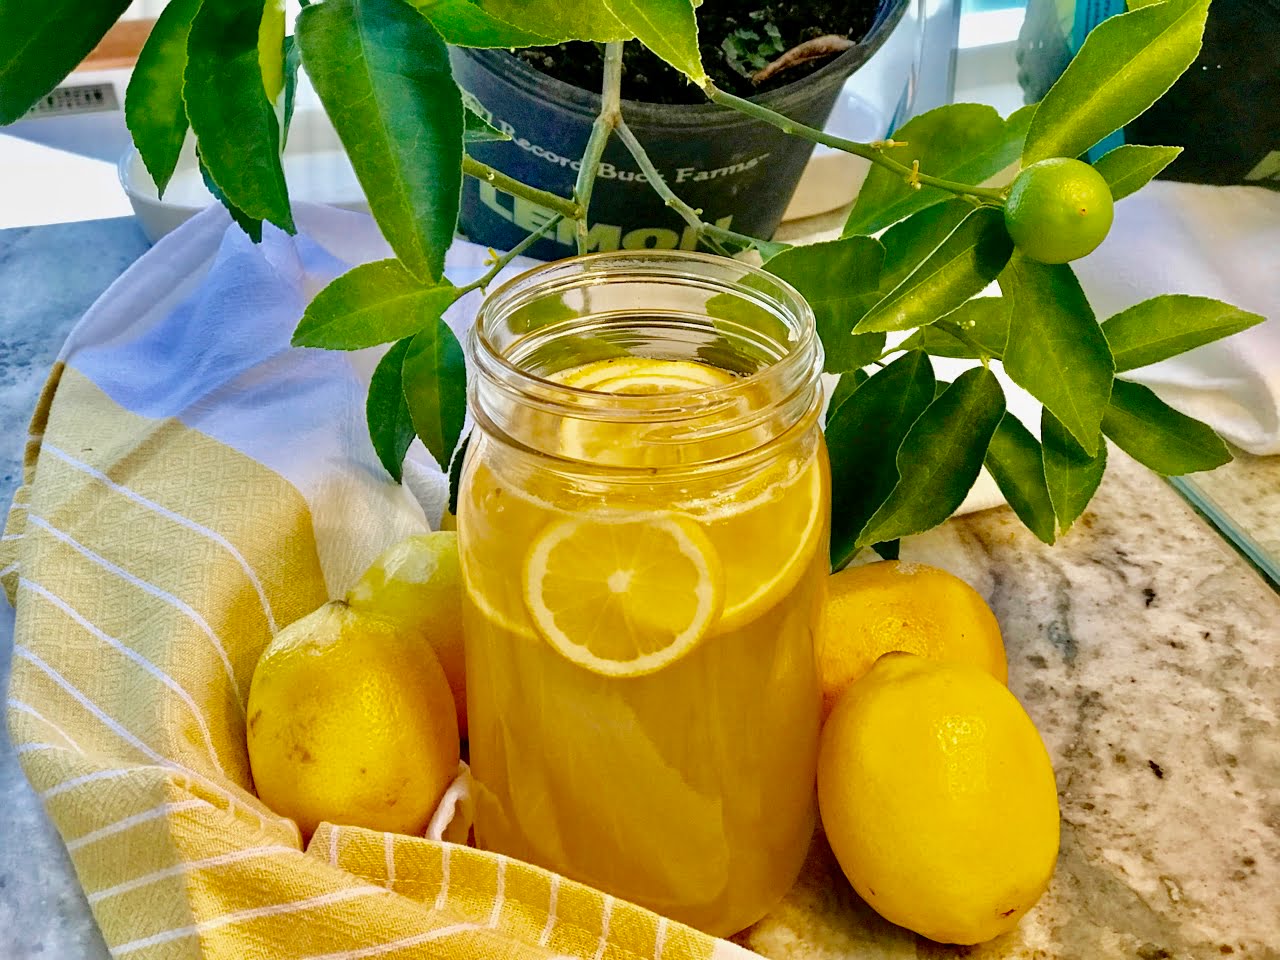 Healthy Homemade Lemonade Recipe